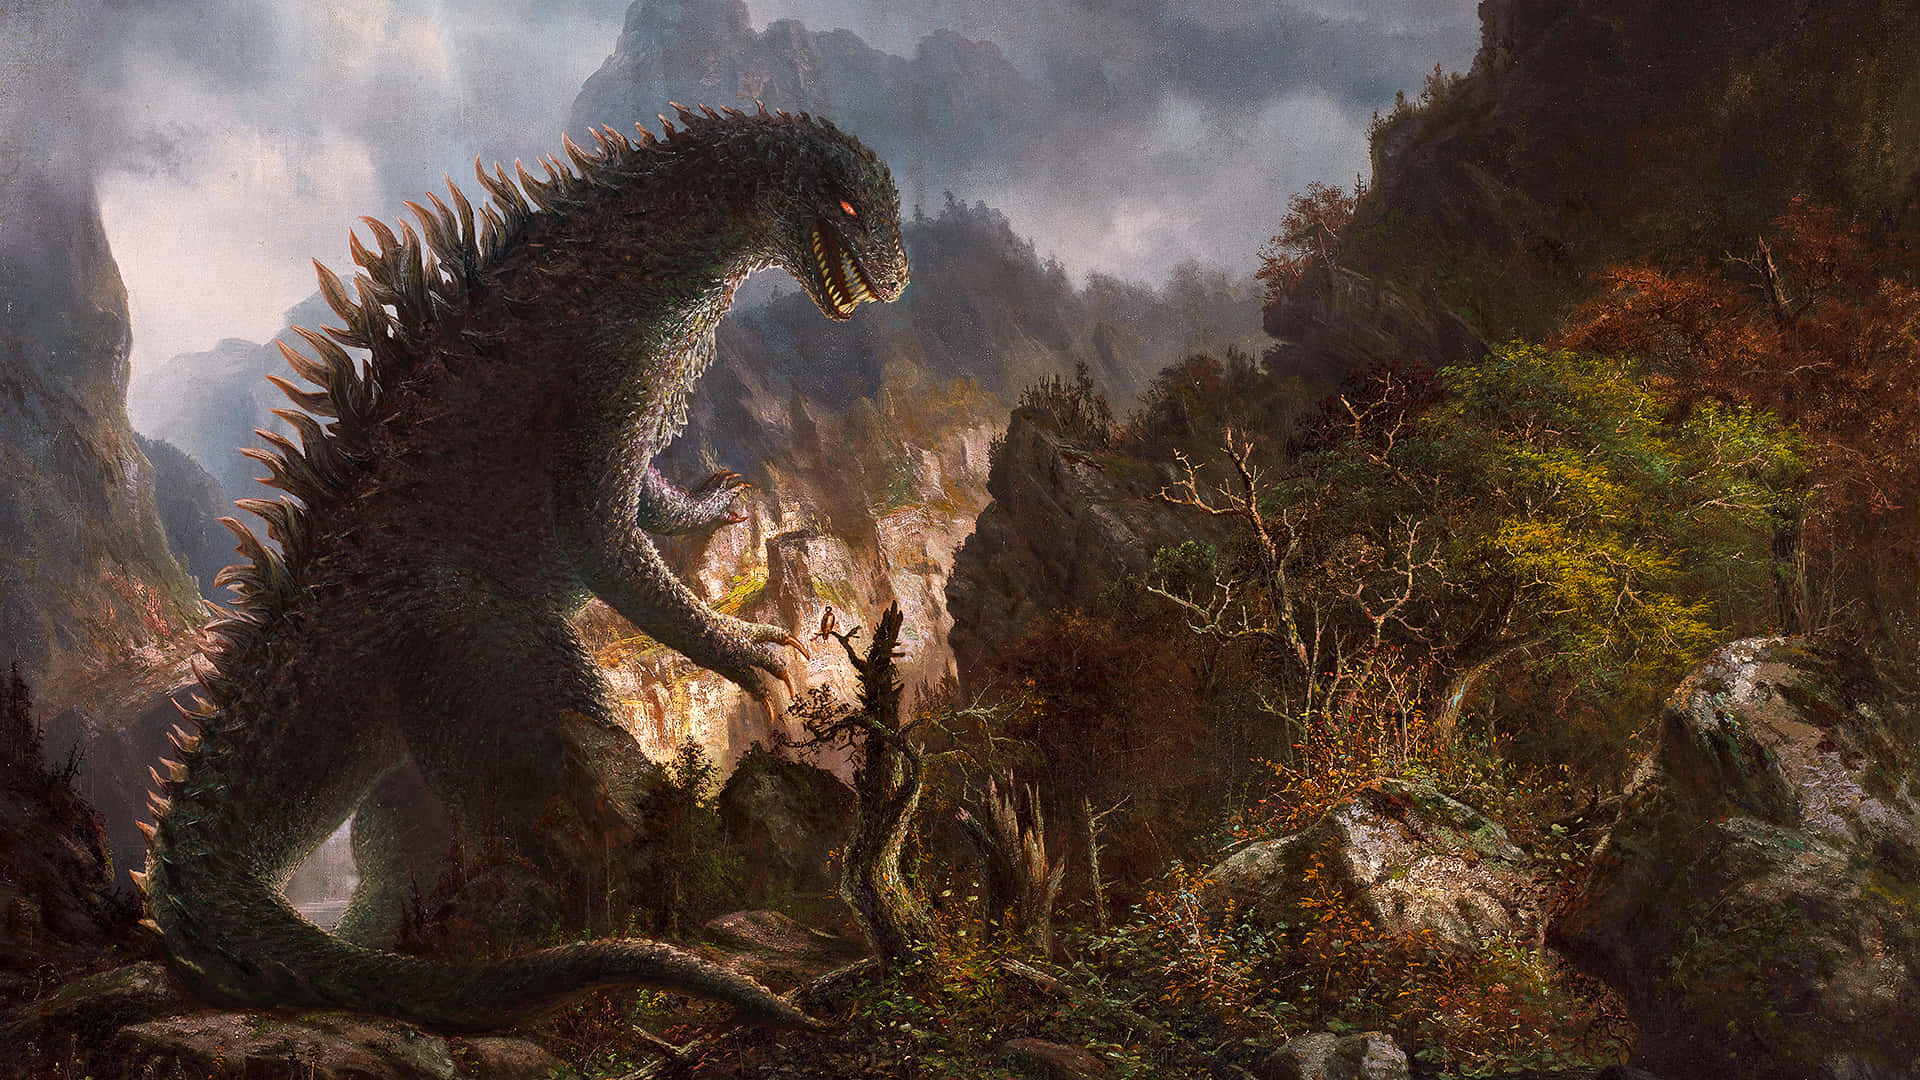 Godzillaim Bergwald Kunstbild